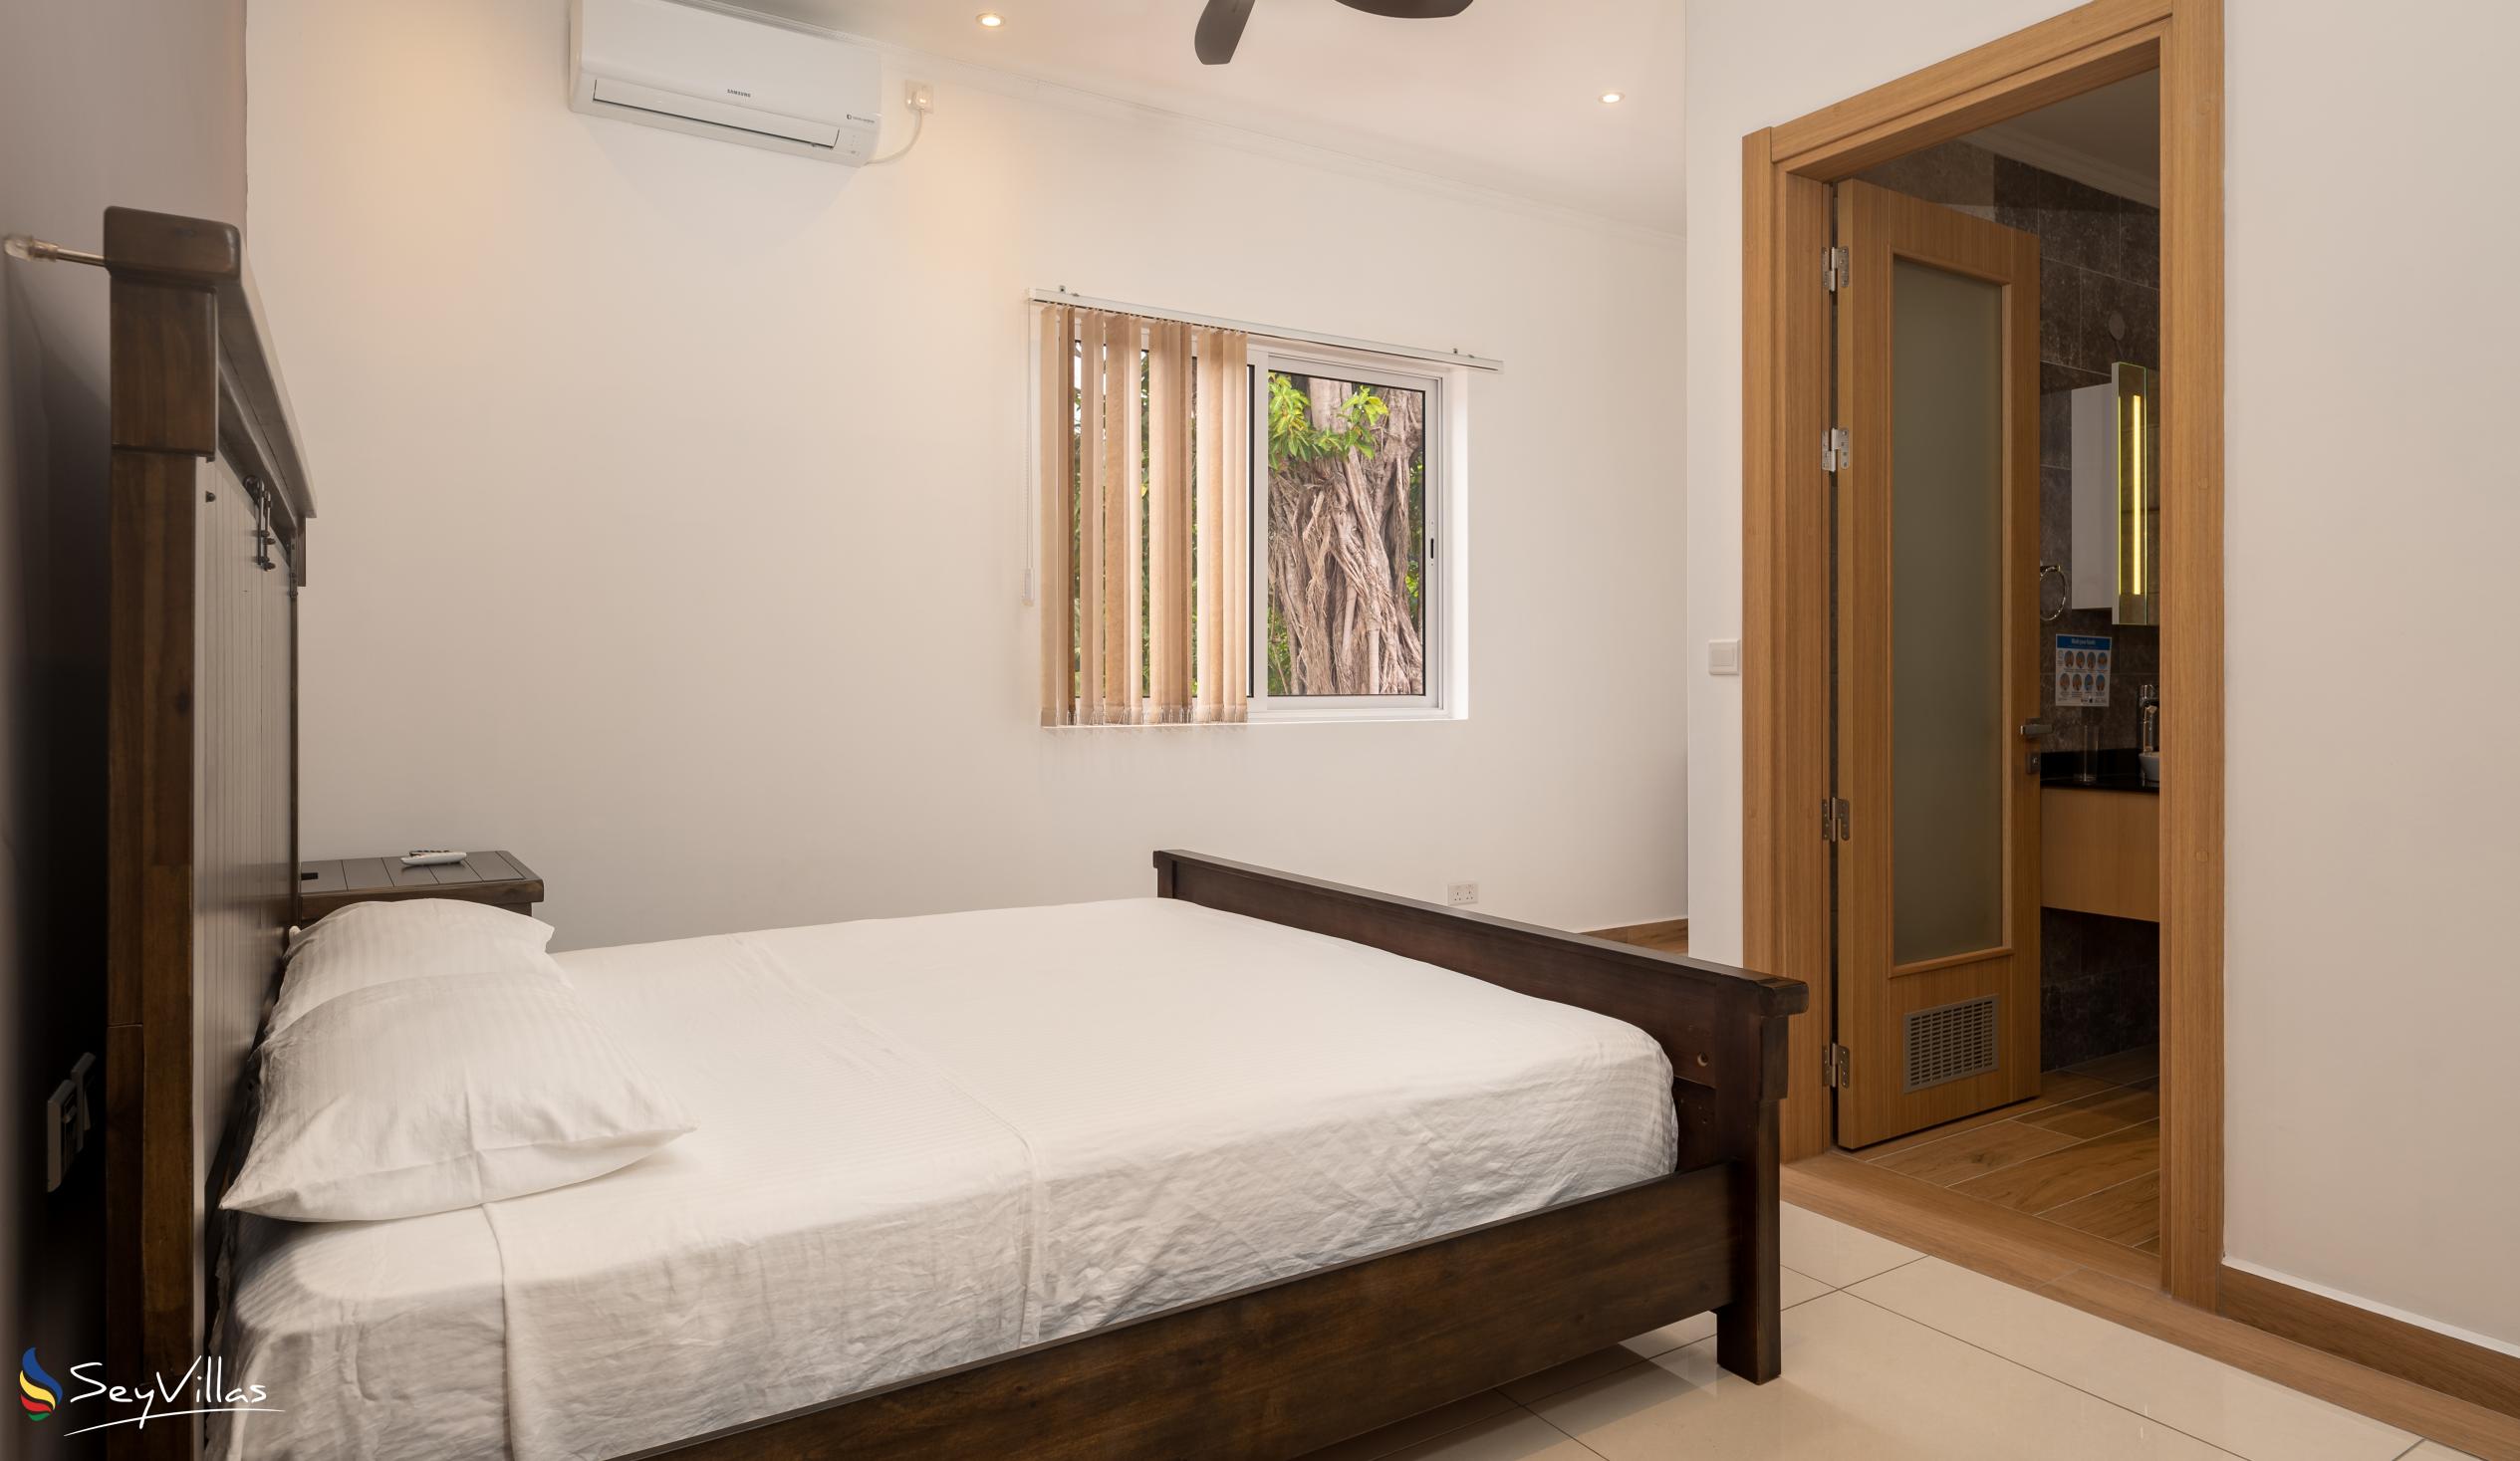 Foto 33: Royale Suites by Arc Royale Luxury Apartments - Appartement 2 chambres - Mahé (Seychelles)